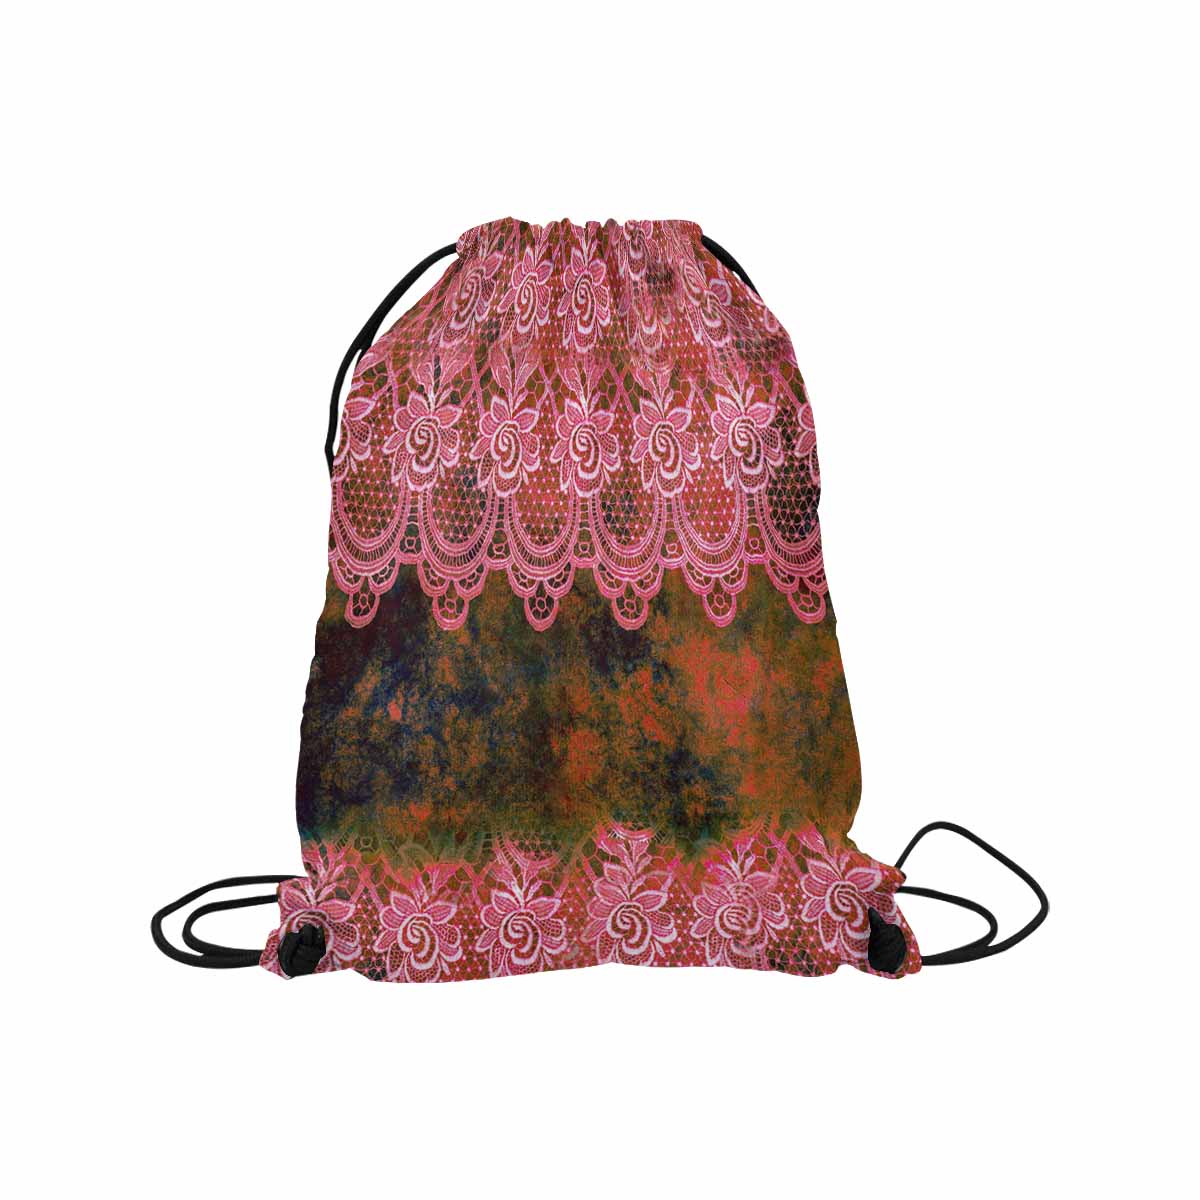 Victorian lace print, DRAWSTRING BAG, MEDIUM, design 32